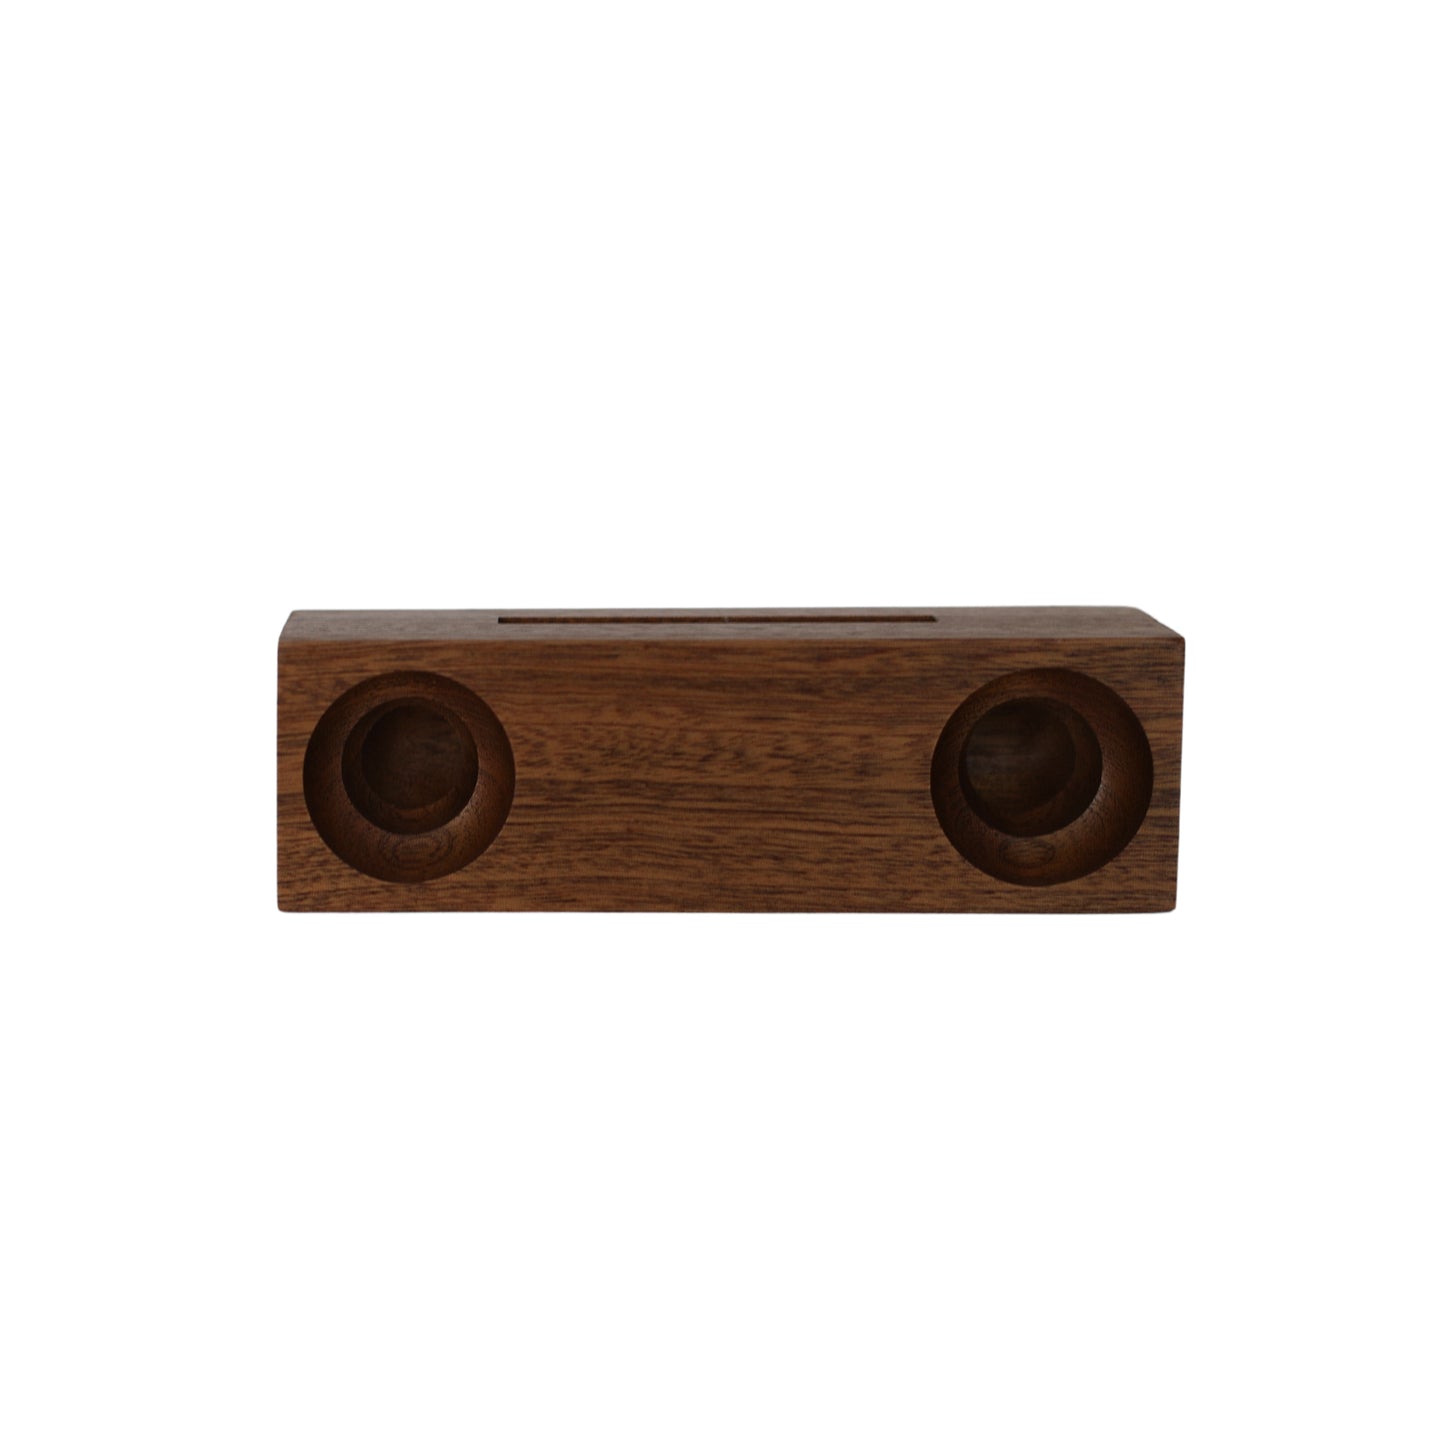 Ebony Wood Amplifier/Phone Holder, 6.75" X 2"